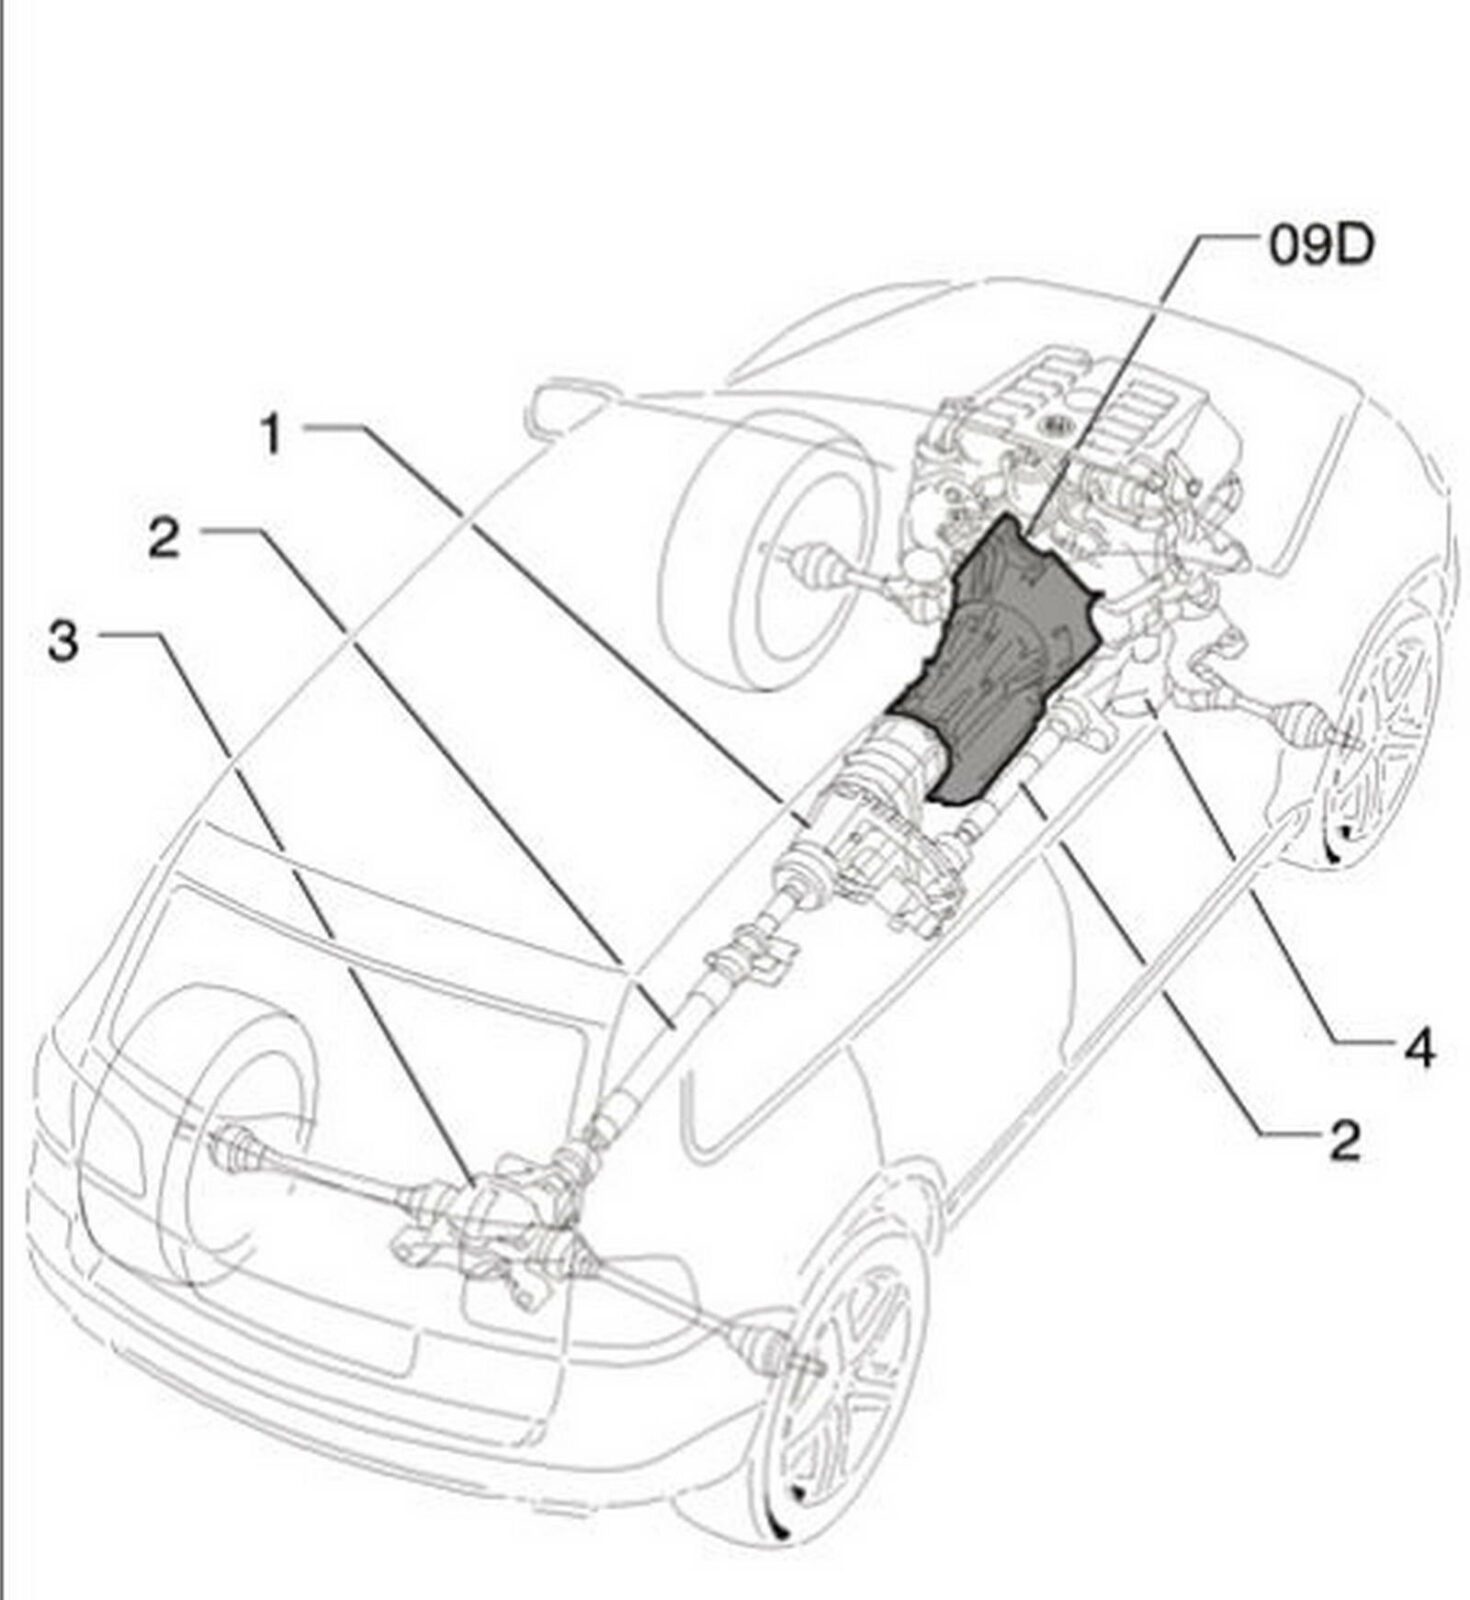 VW 6-Speed Volkswagen Automatic Transmission 09D Repair Manual – PDF